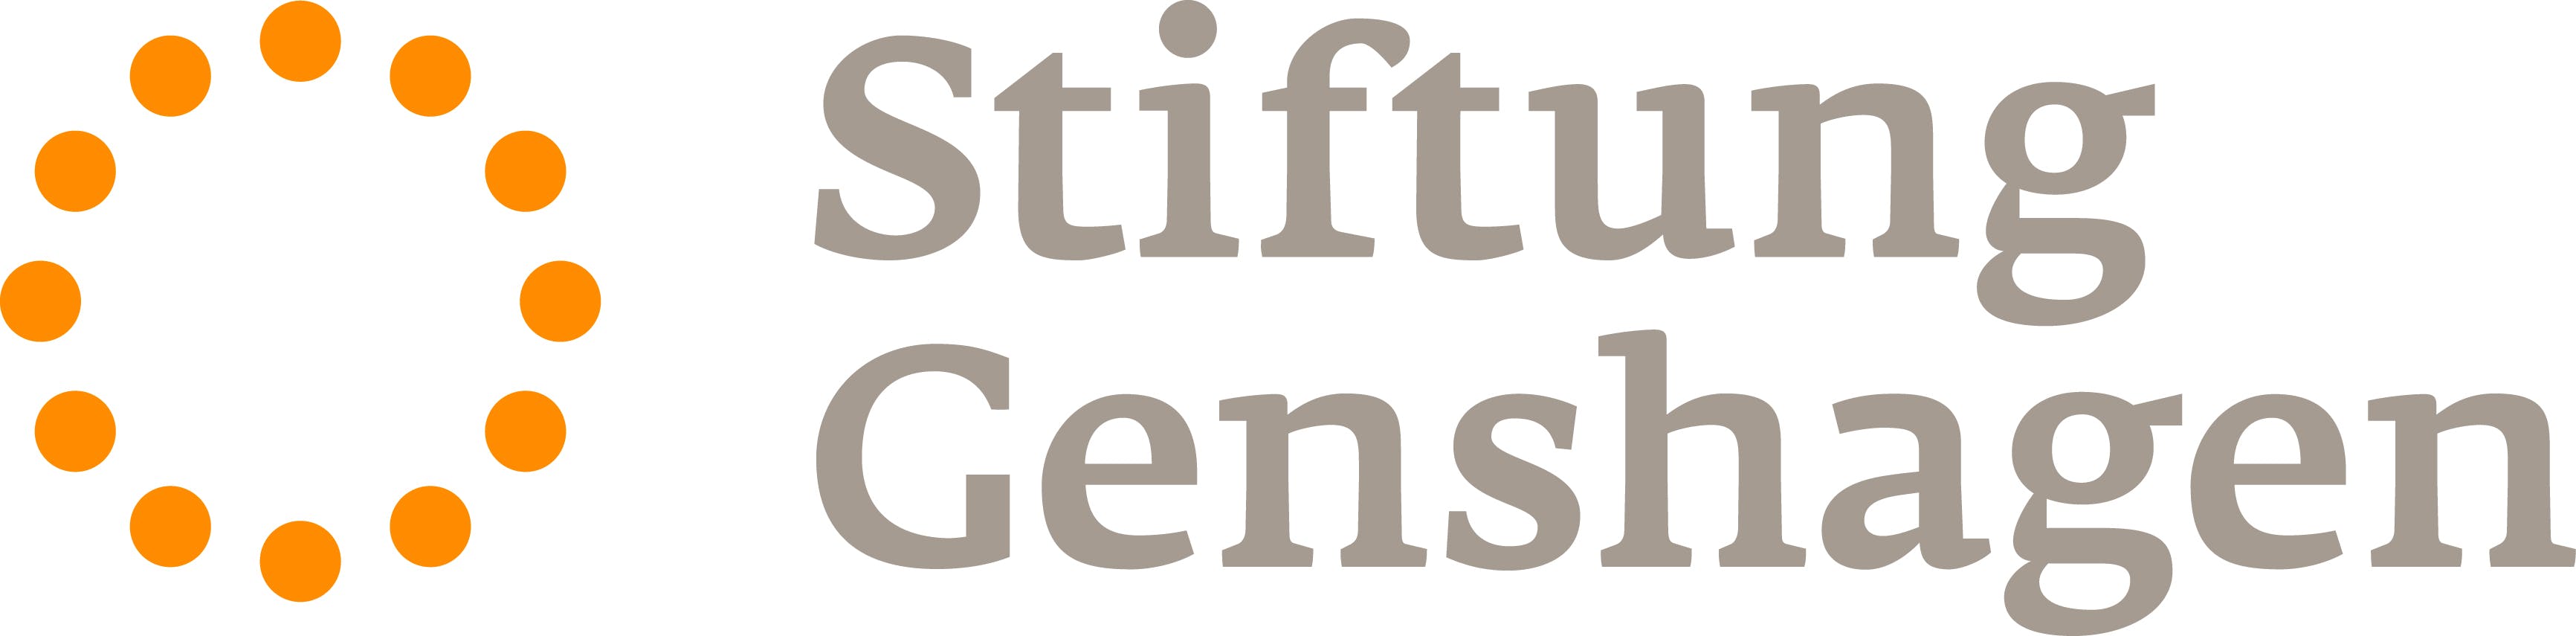 Stiftung Genshagen logo